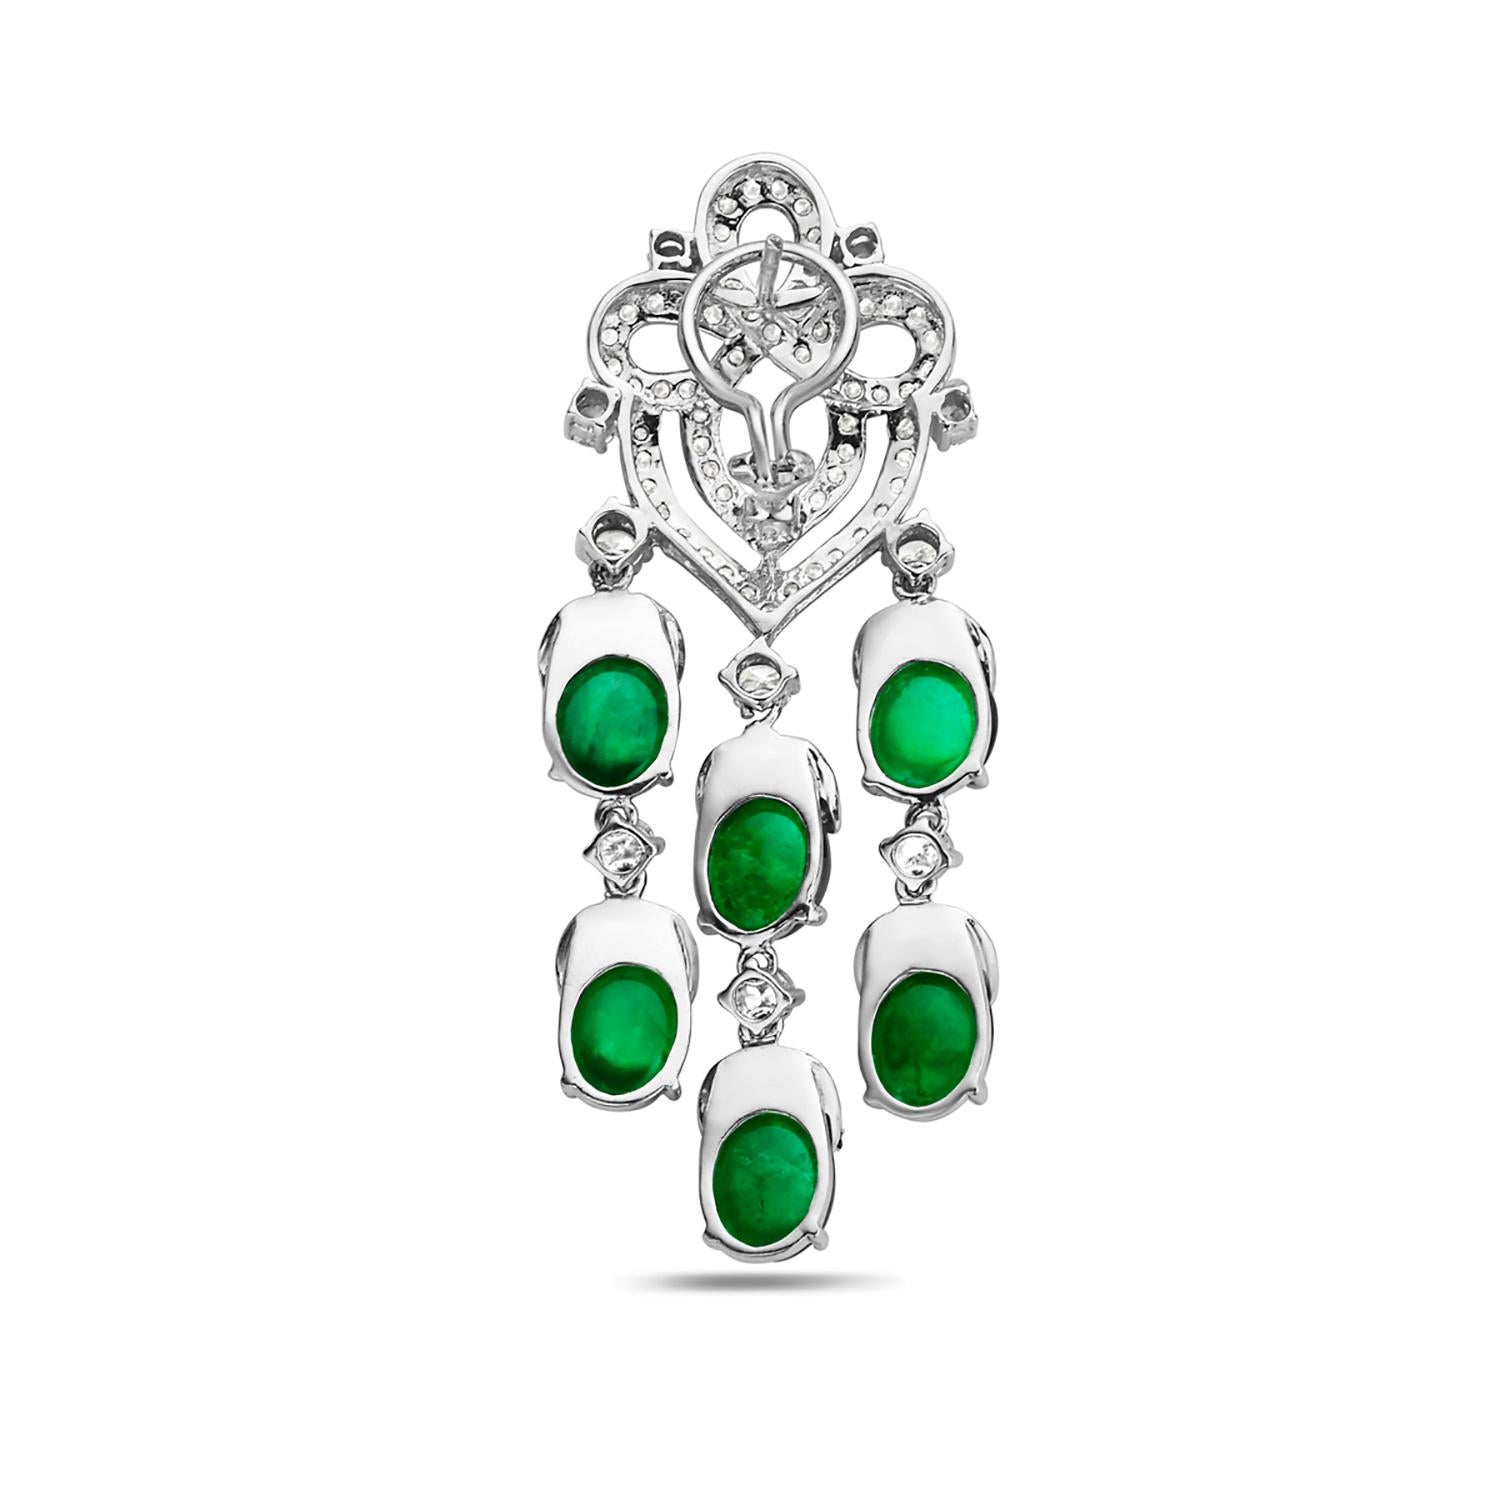 Mixed Cut 18k White Gold Oval Shaped Zambian Cabochone Emerald Chandelier Earrings For Sale